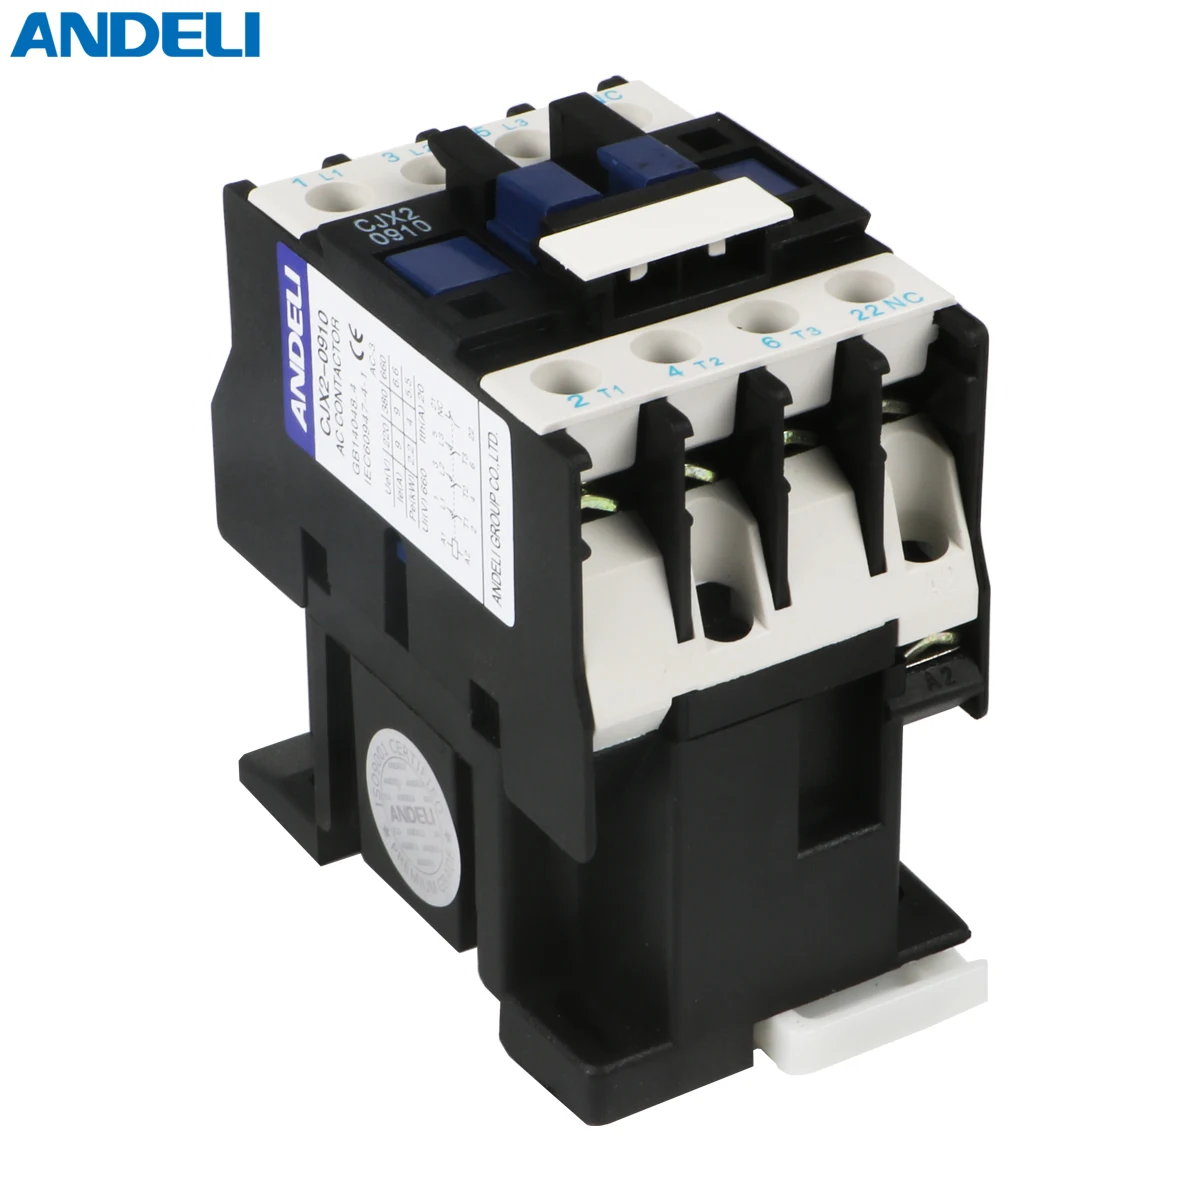 ANDELI contactor CJX2-0910 9A 380V magnetic contactor